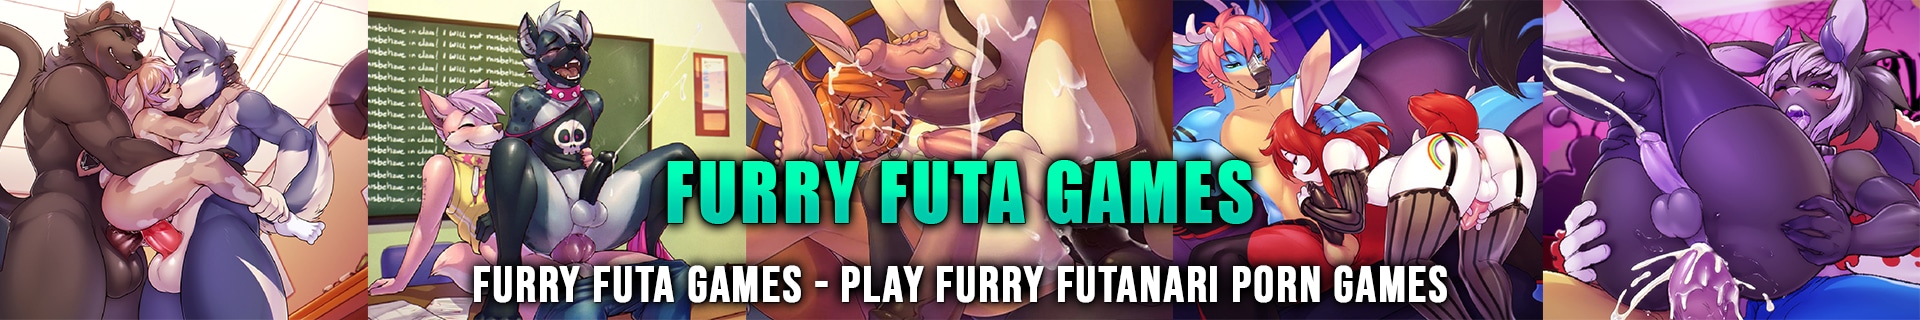 Furry Futa Games: Free Futanari Hentai Shemale Gaming